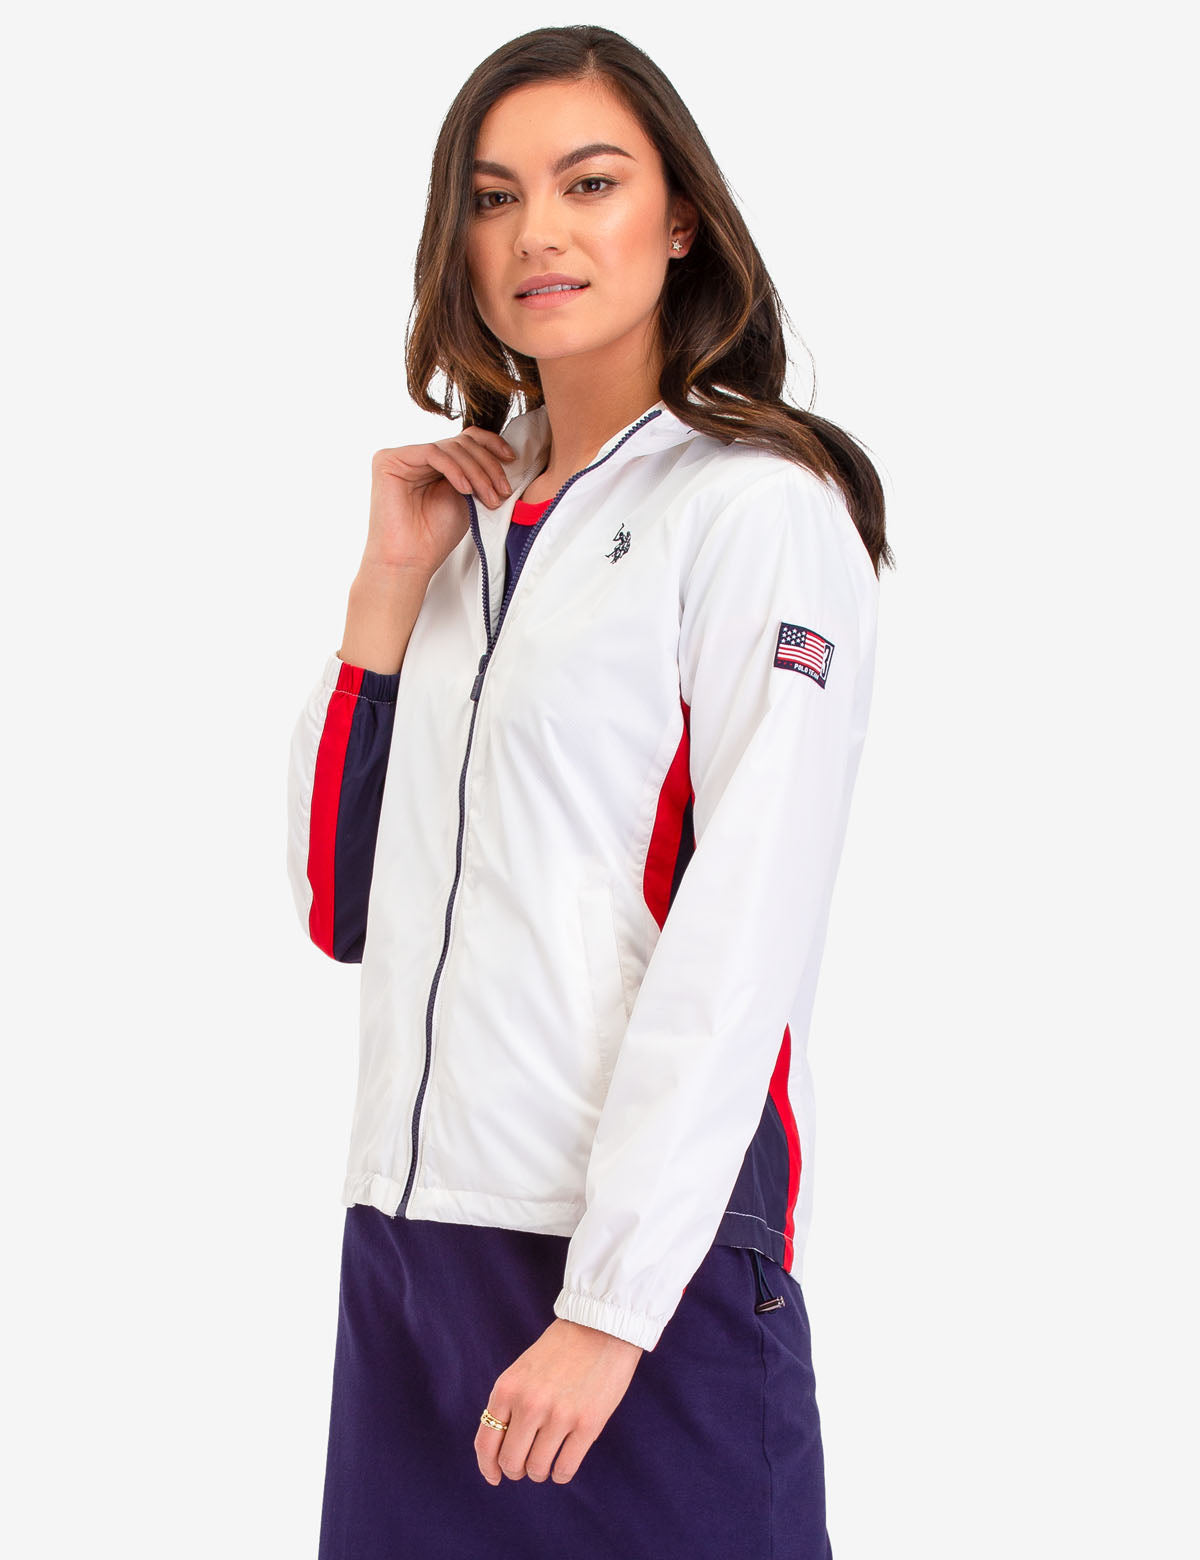 female polo jackets